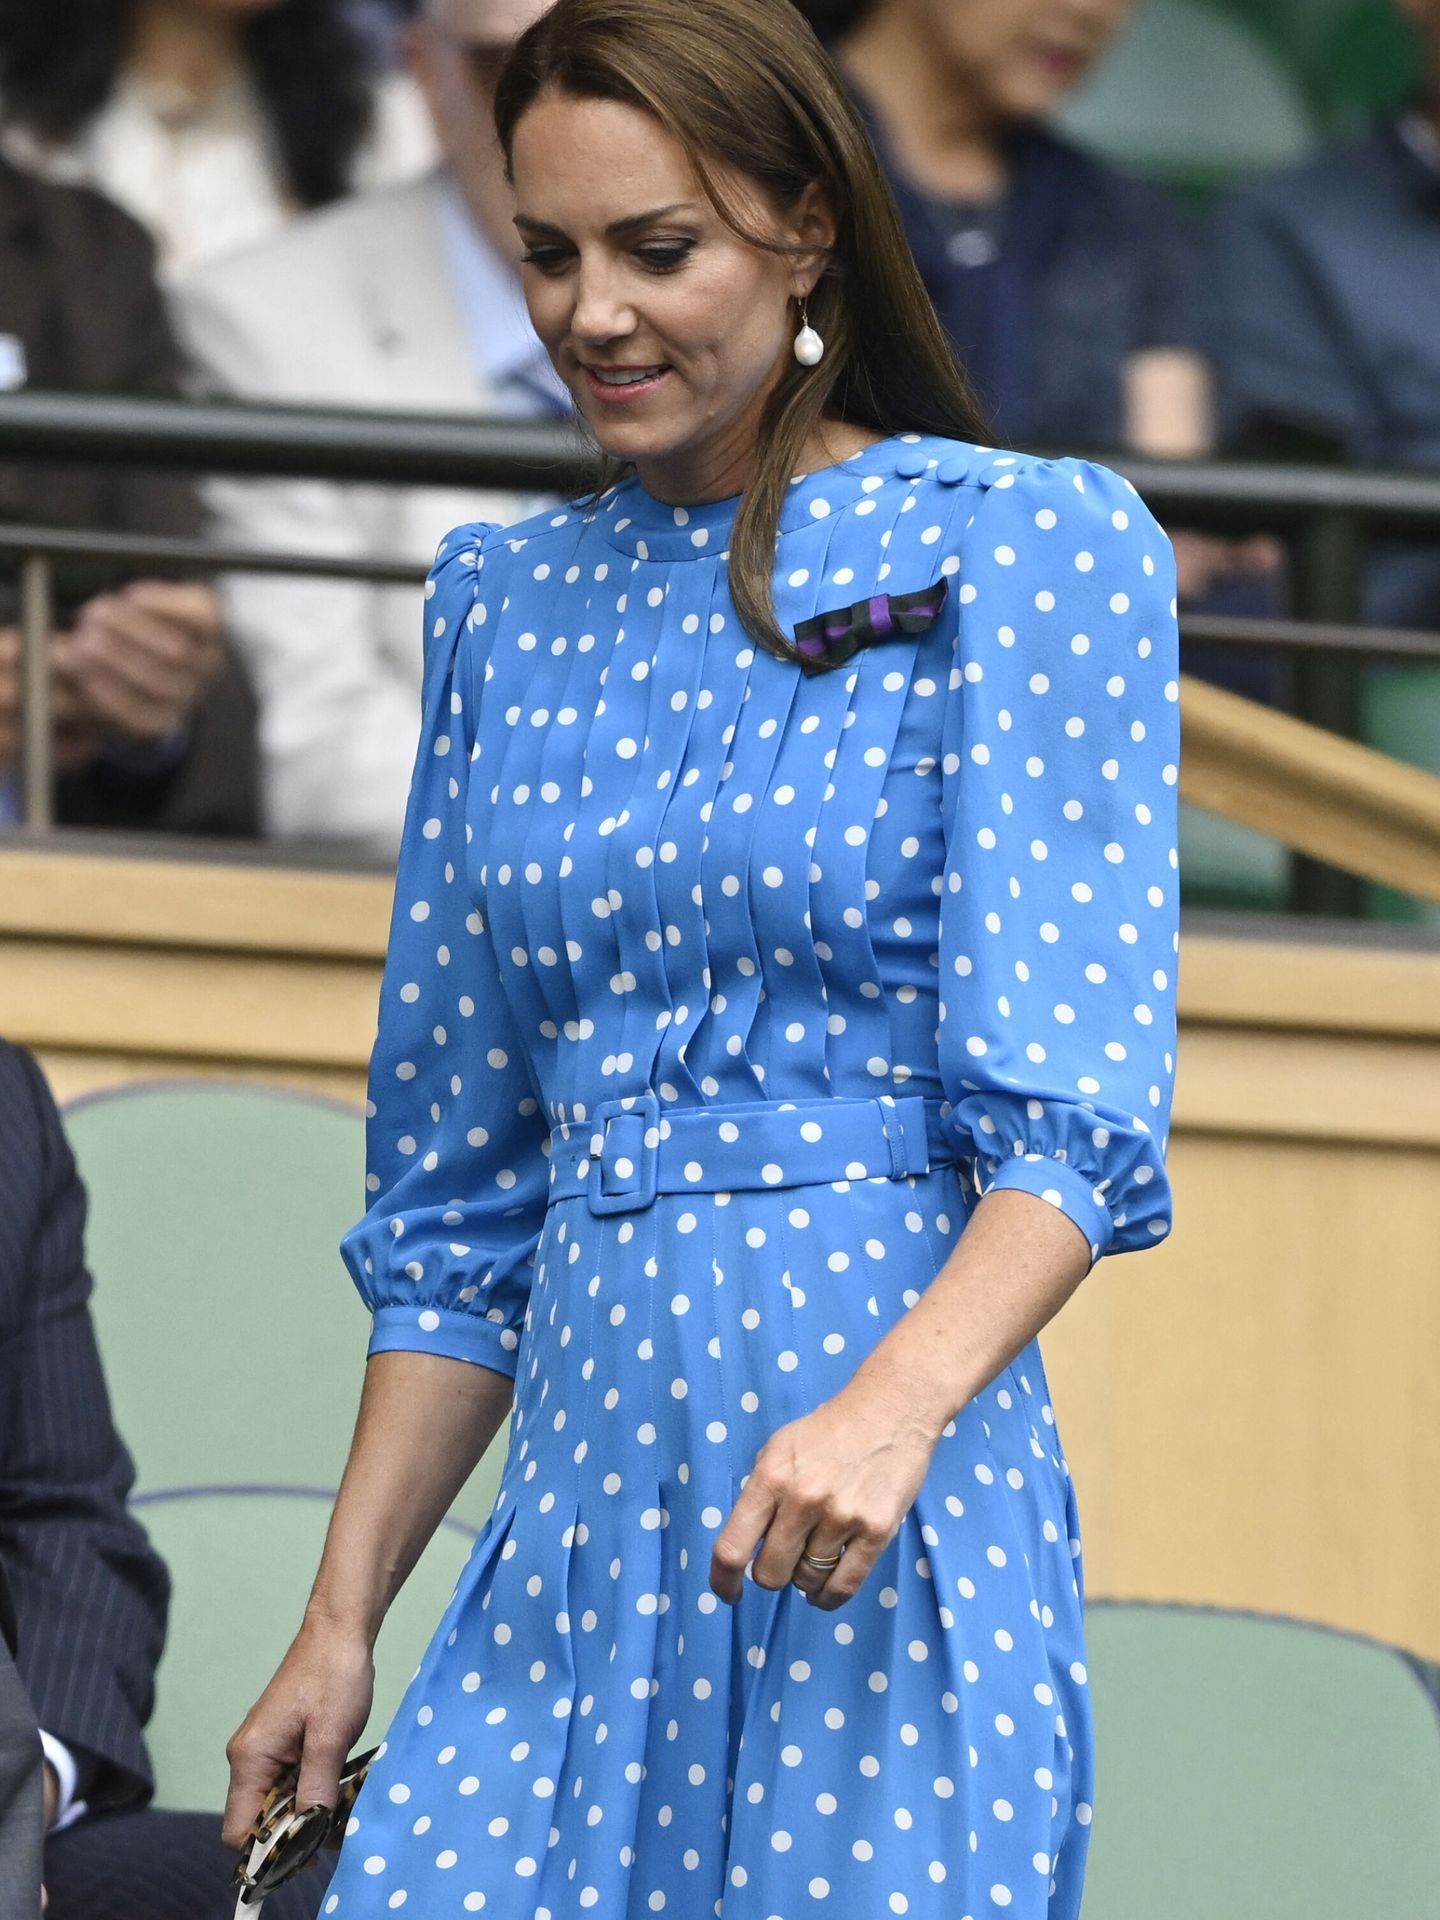 La duquesa de Cambridge, con el vestido de lunares en Wimbledon. (Reuters/Toby Melville)